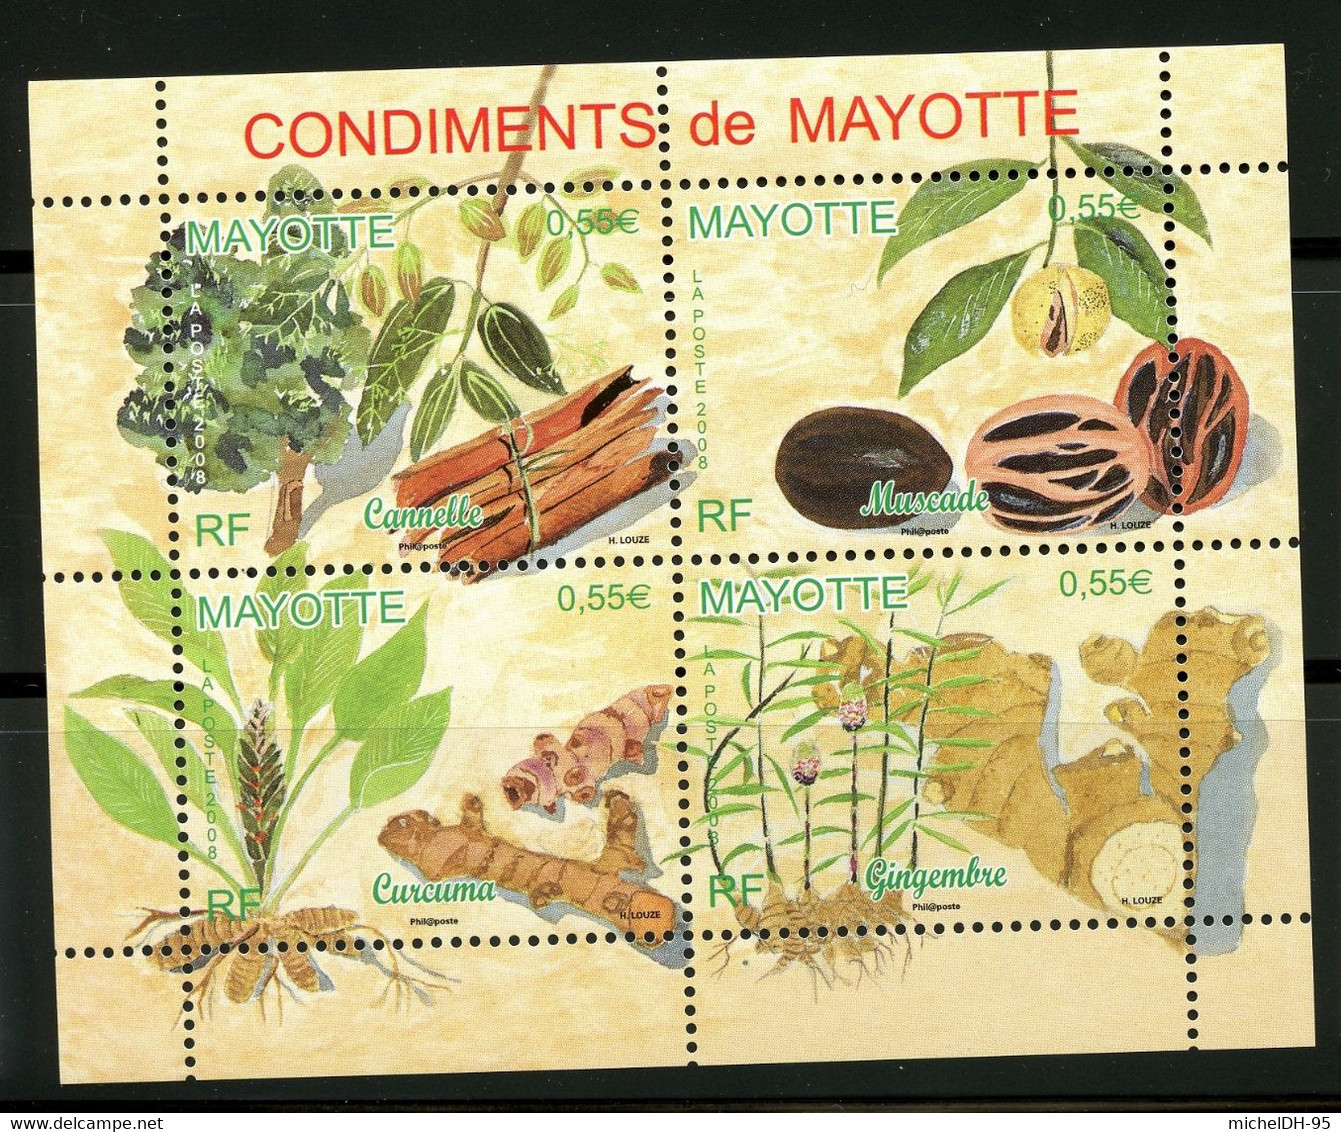 Mayotte - 2008 - Condiments De Mayotte - NEUF SANS TC - Bloc Nos 210-211-212-213 - Cote 9,20 Euros - Ongebruikt